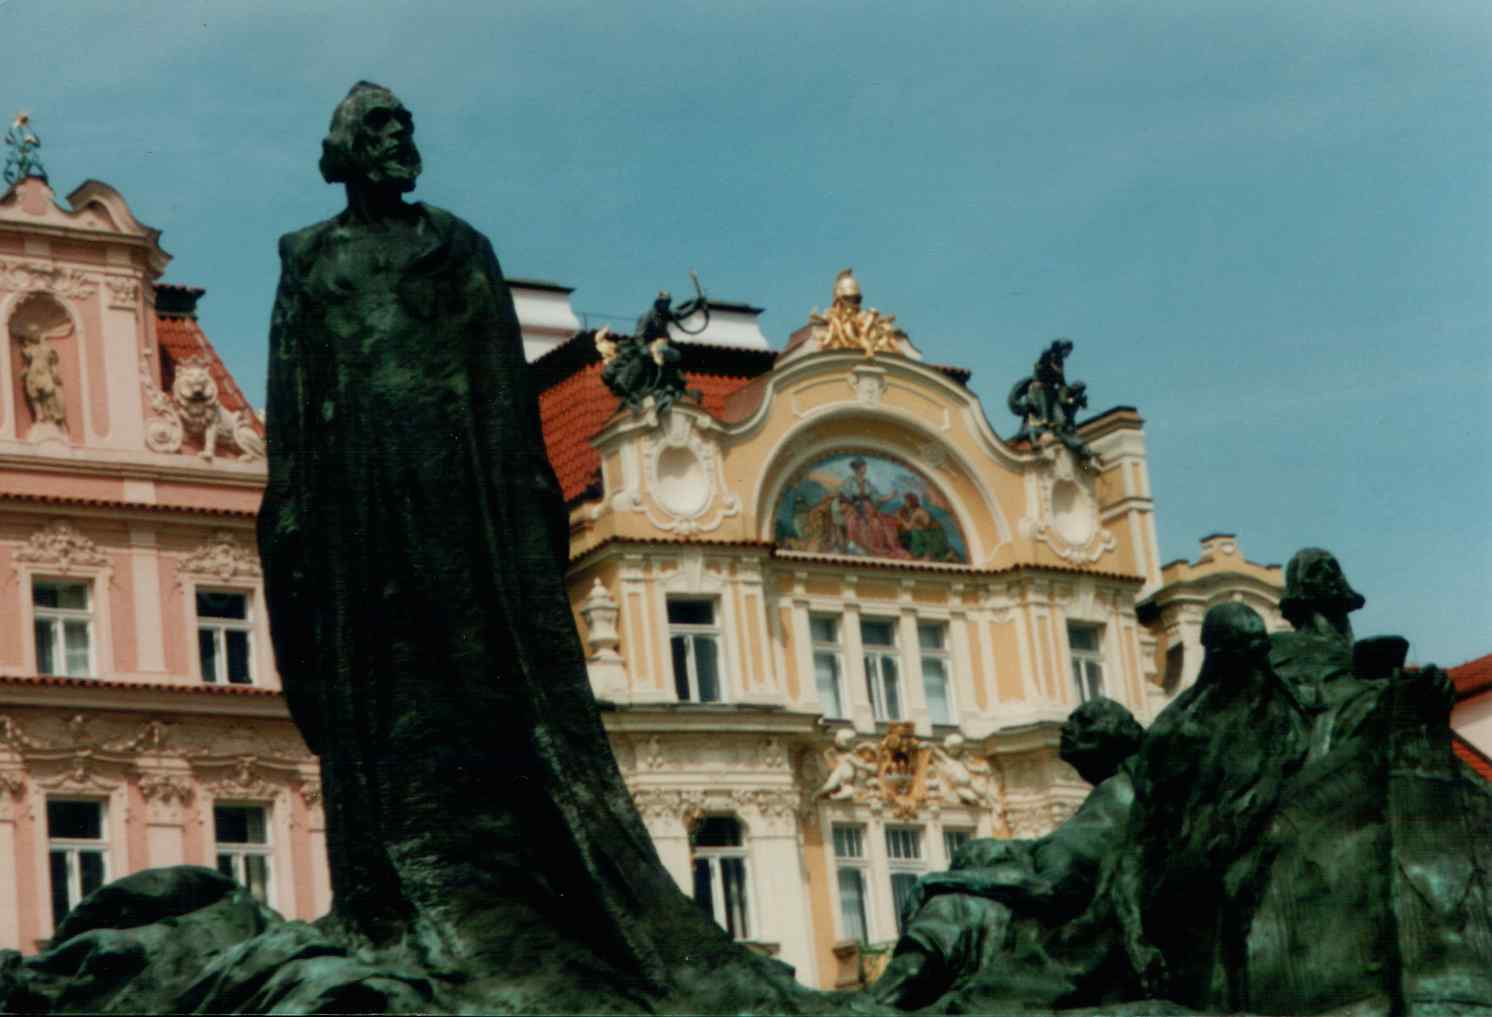 Marktplatz in Prag